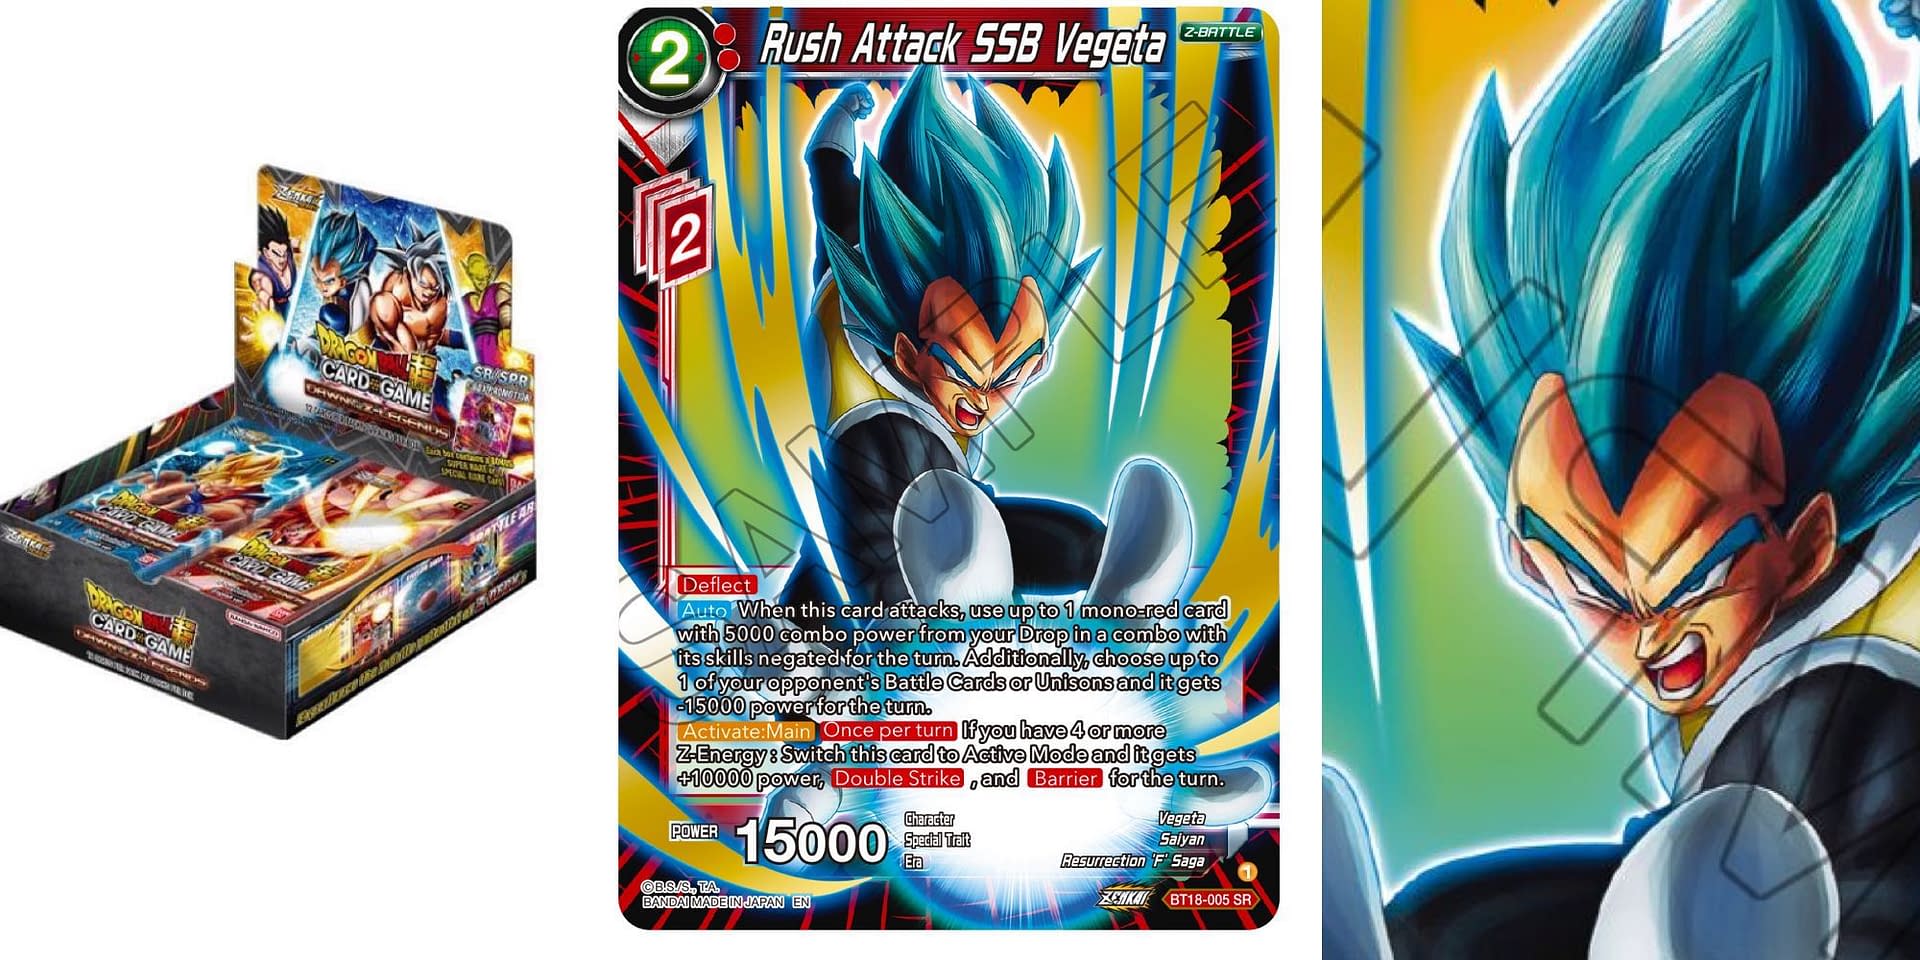 When Will Ultra Ego Vegeta Appear In Dragon Ball Super Card Game?